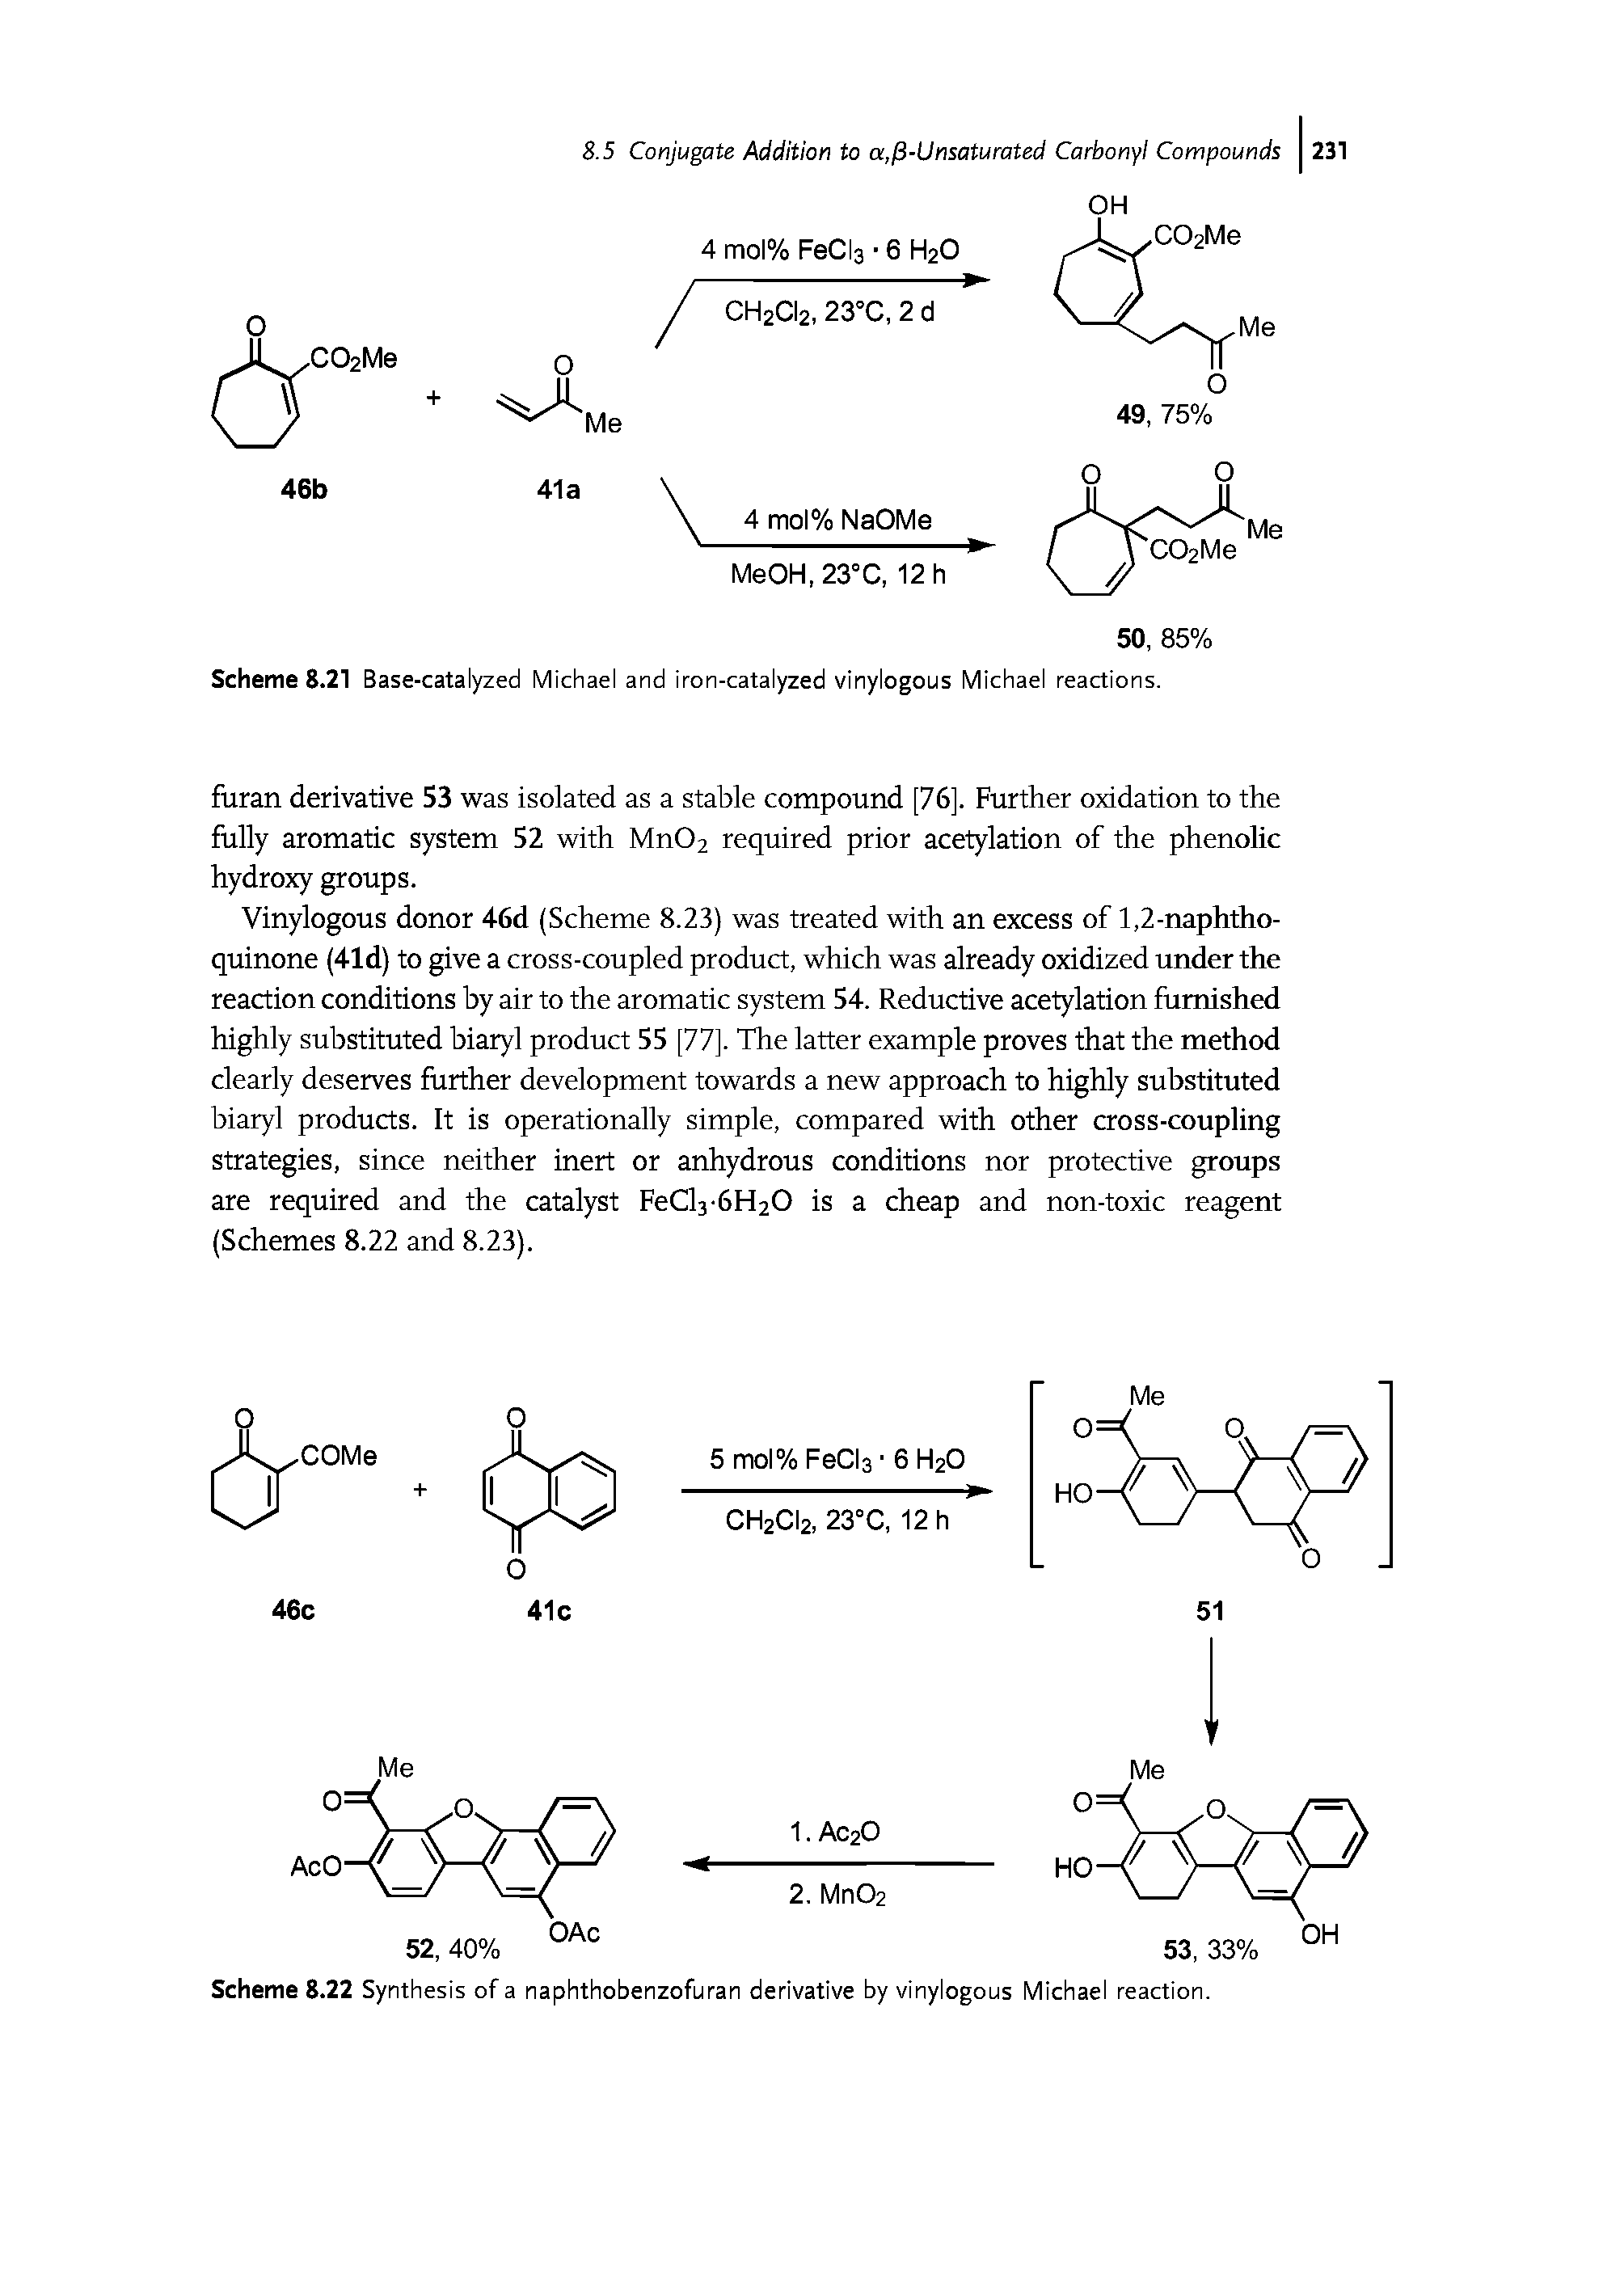 Scheme 8.22 Synthesis of a naphthobenzofuran derivative by vinylogous Michael reaction.